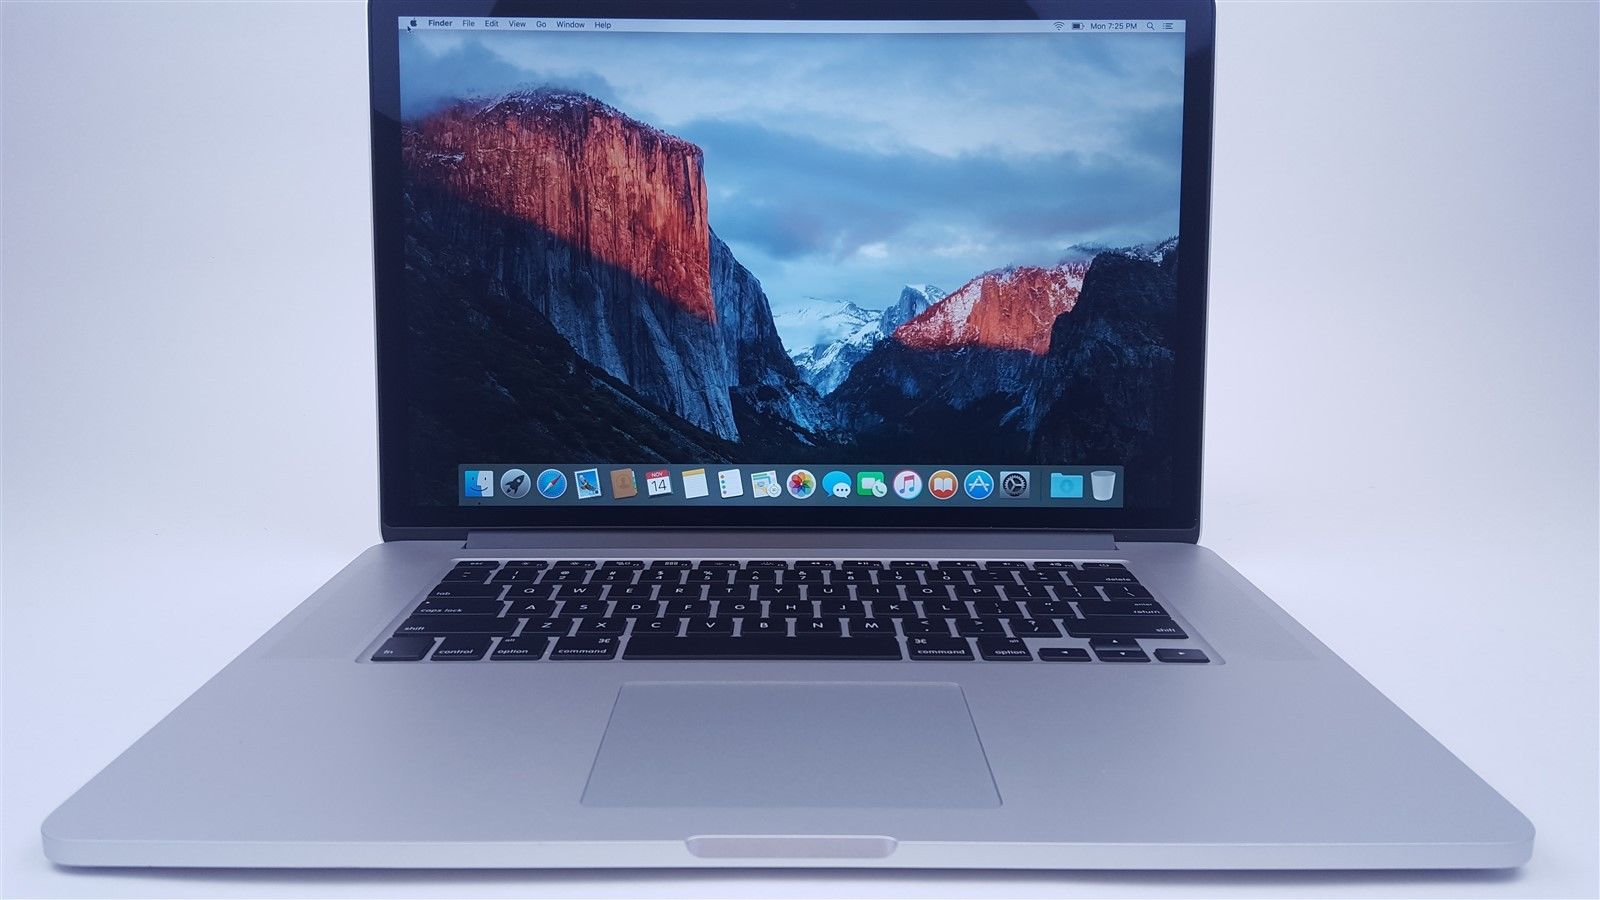 apple macbook pro 15 2.6ghz review online